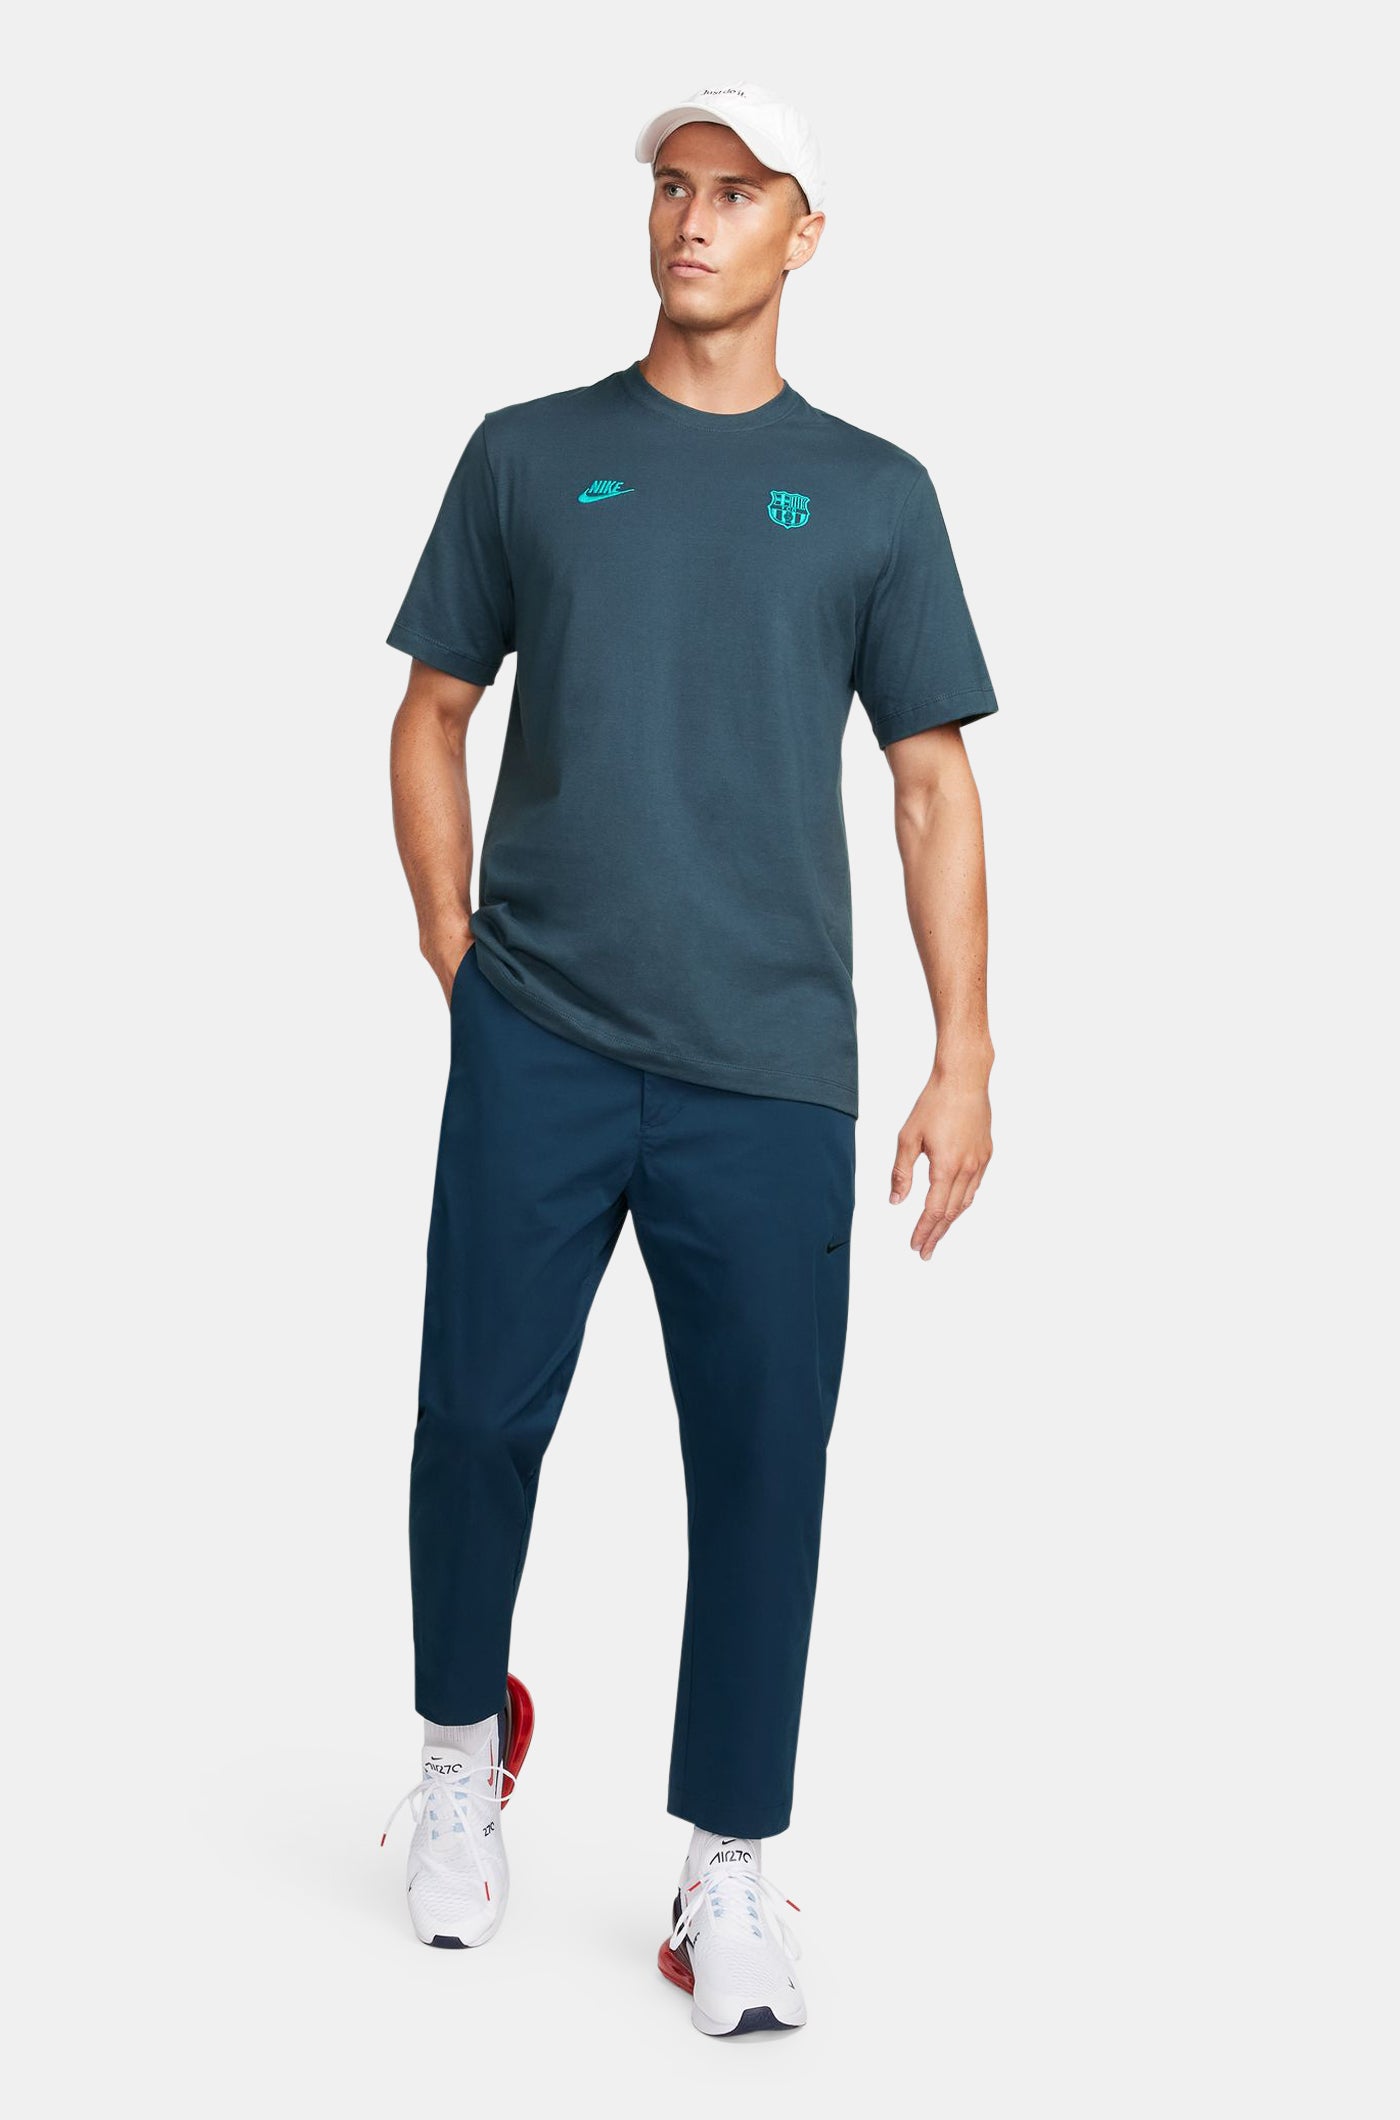 Samarreta blava escut Barça Nike